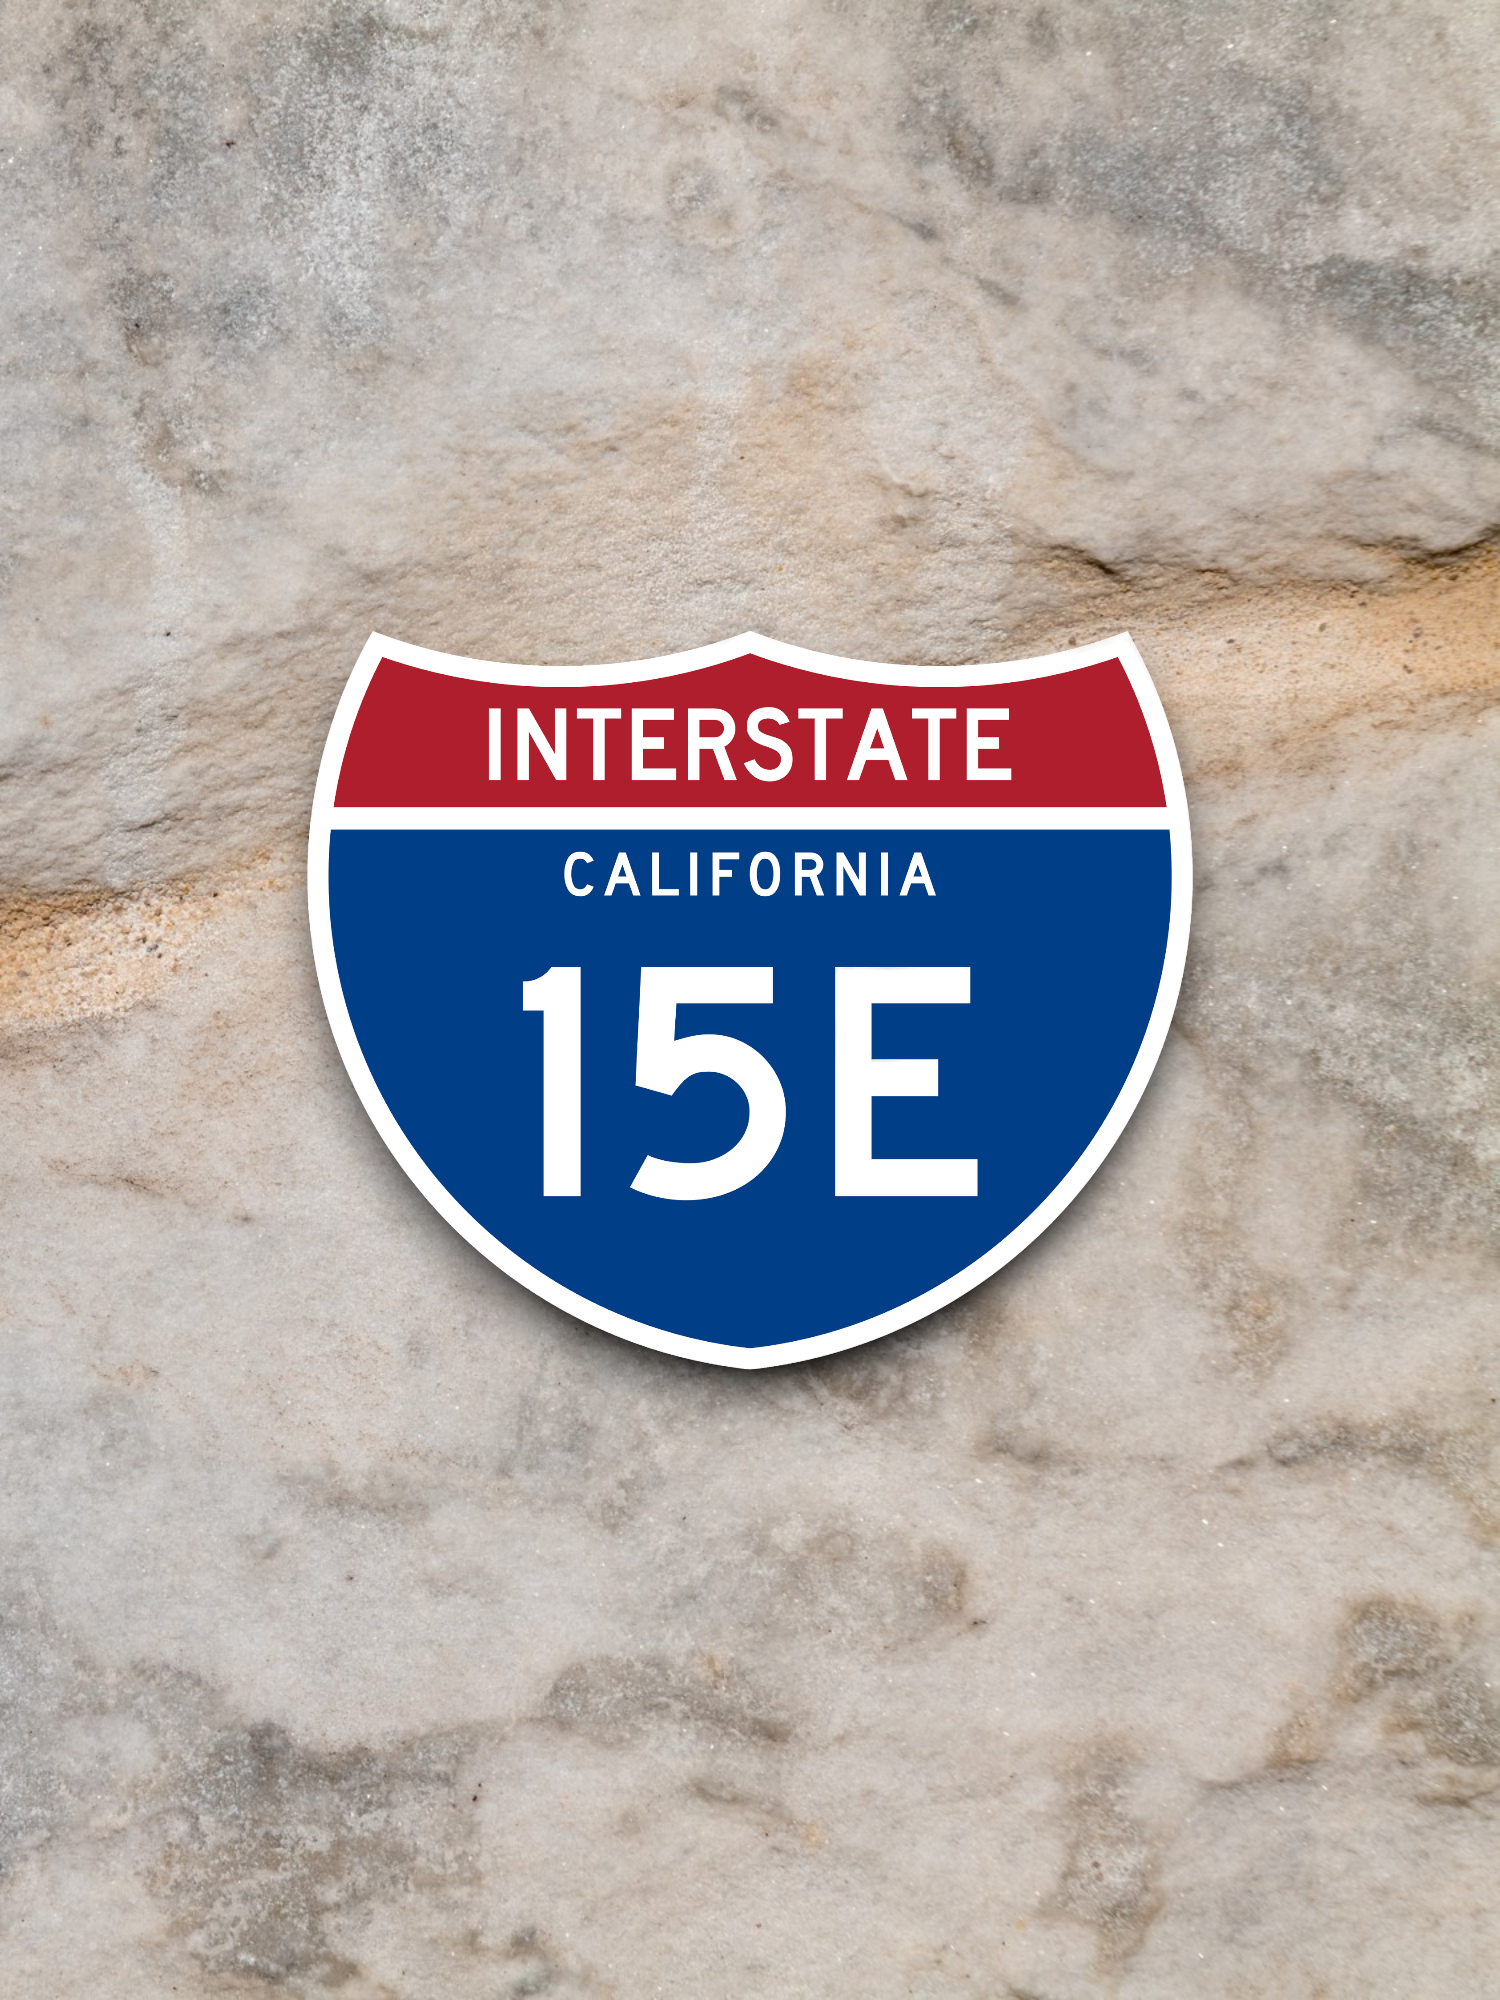 Interstate I-15E California - Road Sign Sticker